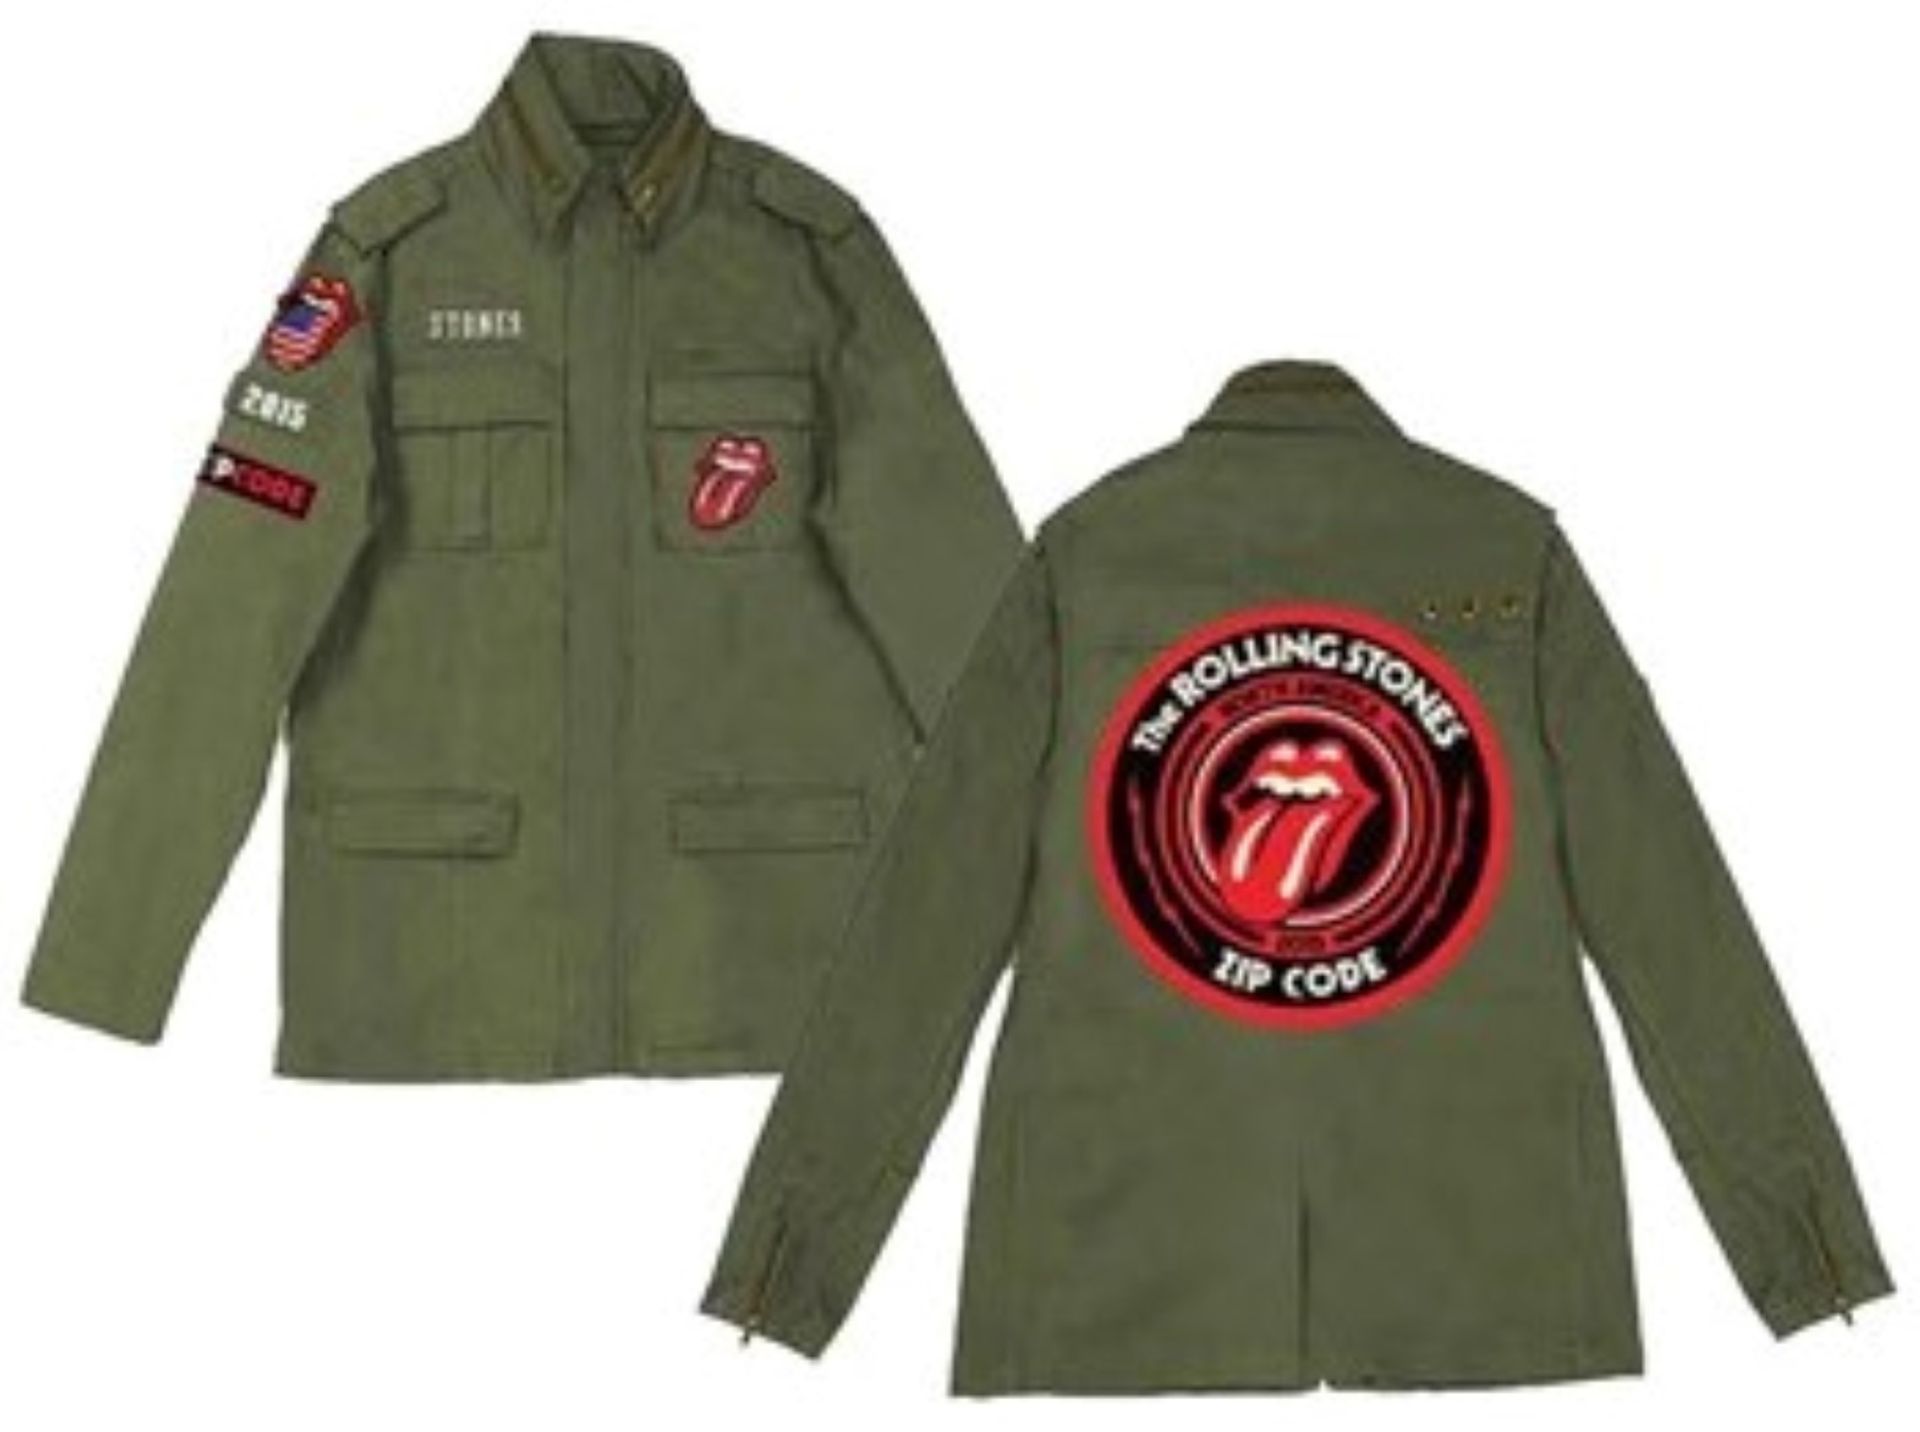 1 x Rolling Stones RS Army Utilitarian Iconic Zip Code Tongue Khaki Jacket - Size: Medium -